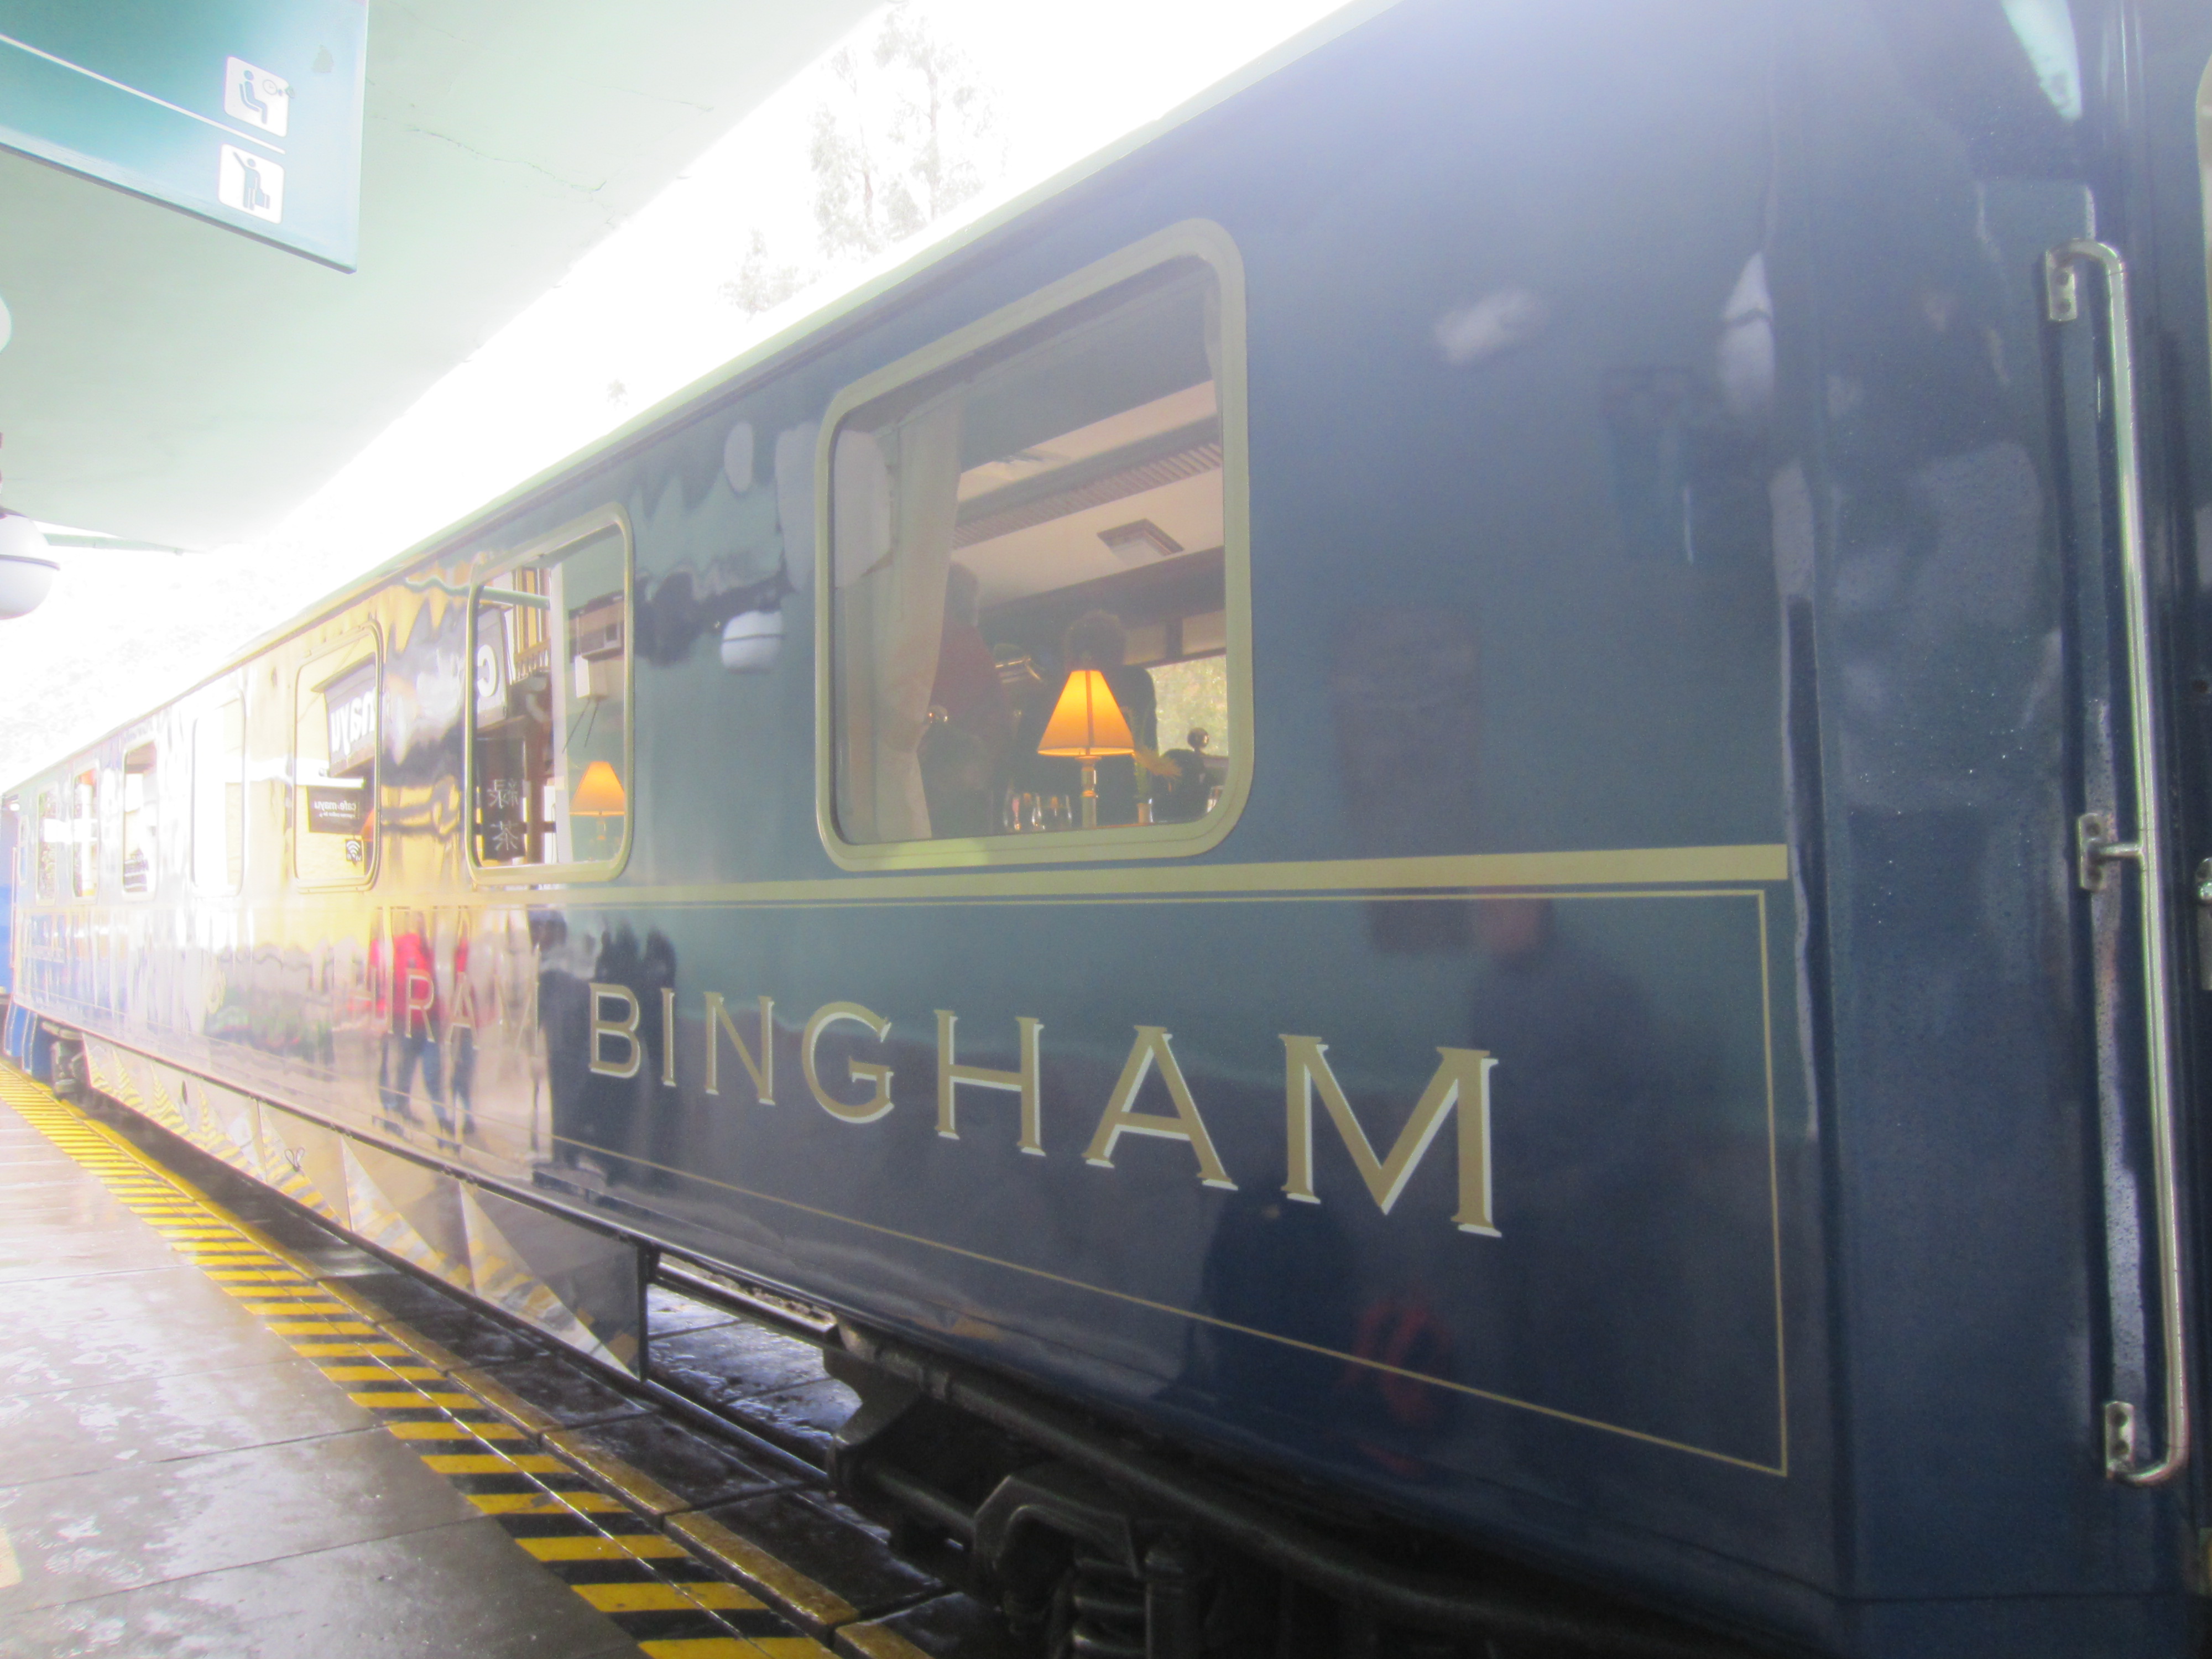 The Hiram Bingham Train